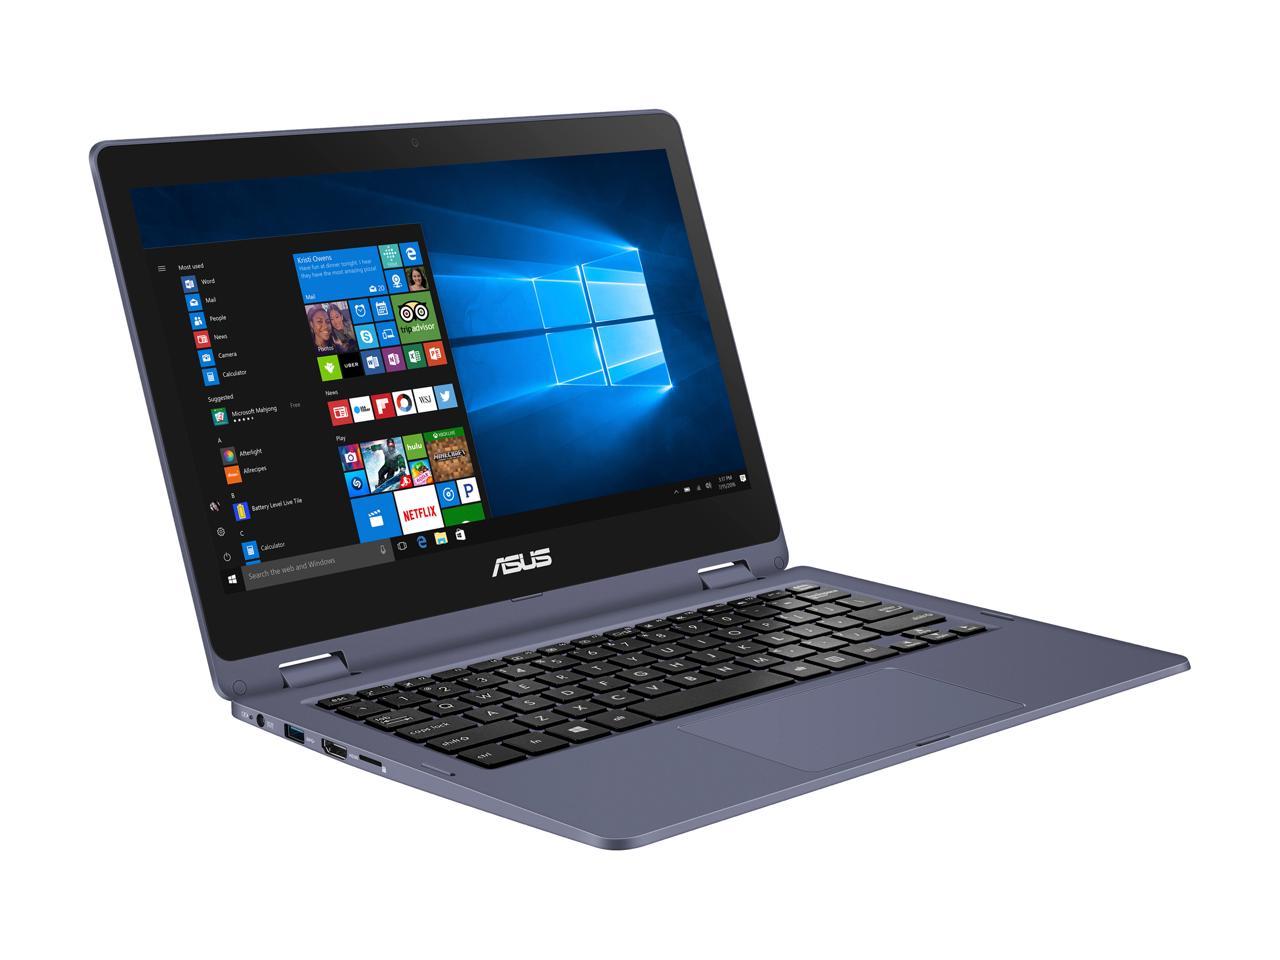 ASUS Vivobook Flip J202NA-DS01T Intel Celeron N3350 (1.1 GHz) 4 GB Memory 64 GB eMMC SSD Intel HD Graphics 500 11.6" Touchscreen 1366 x 768 2-in-1 Laptop Windows 10 S